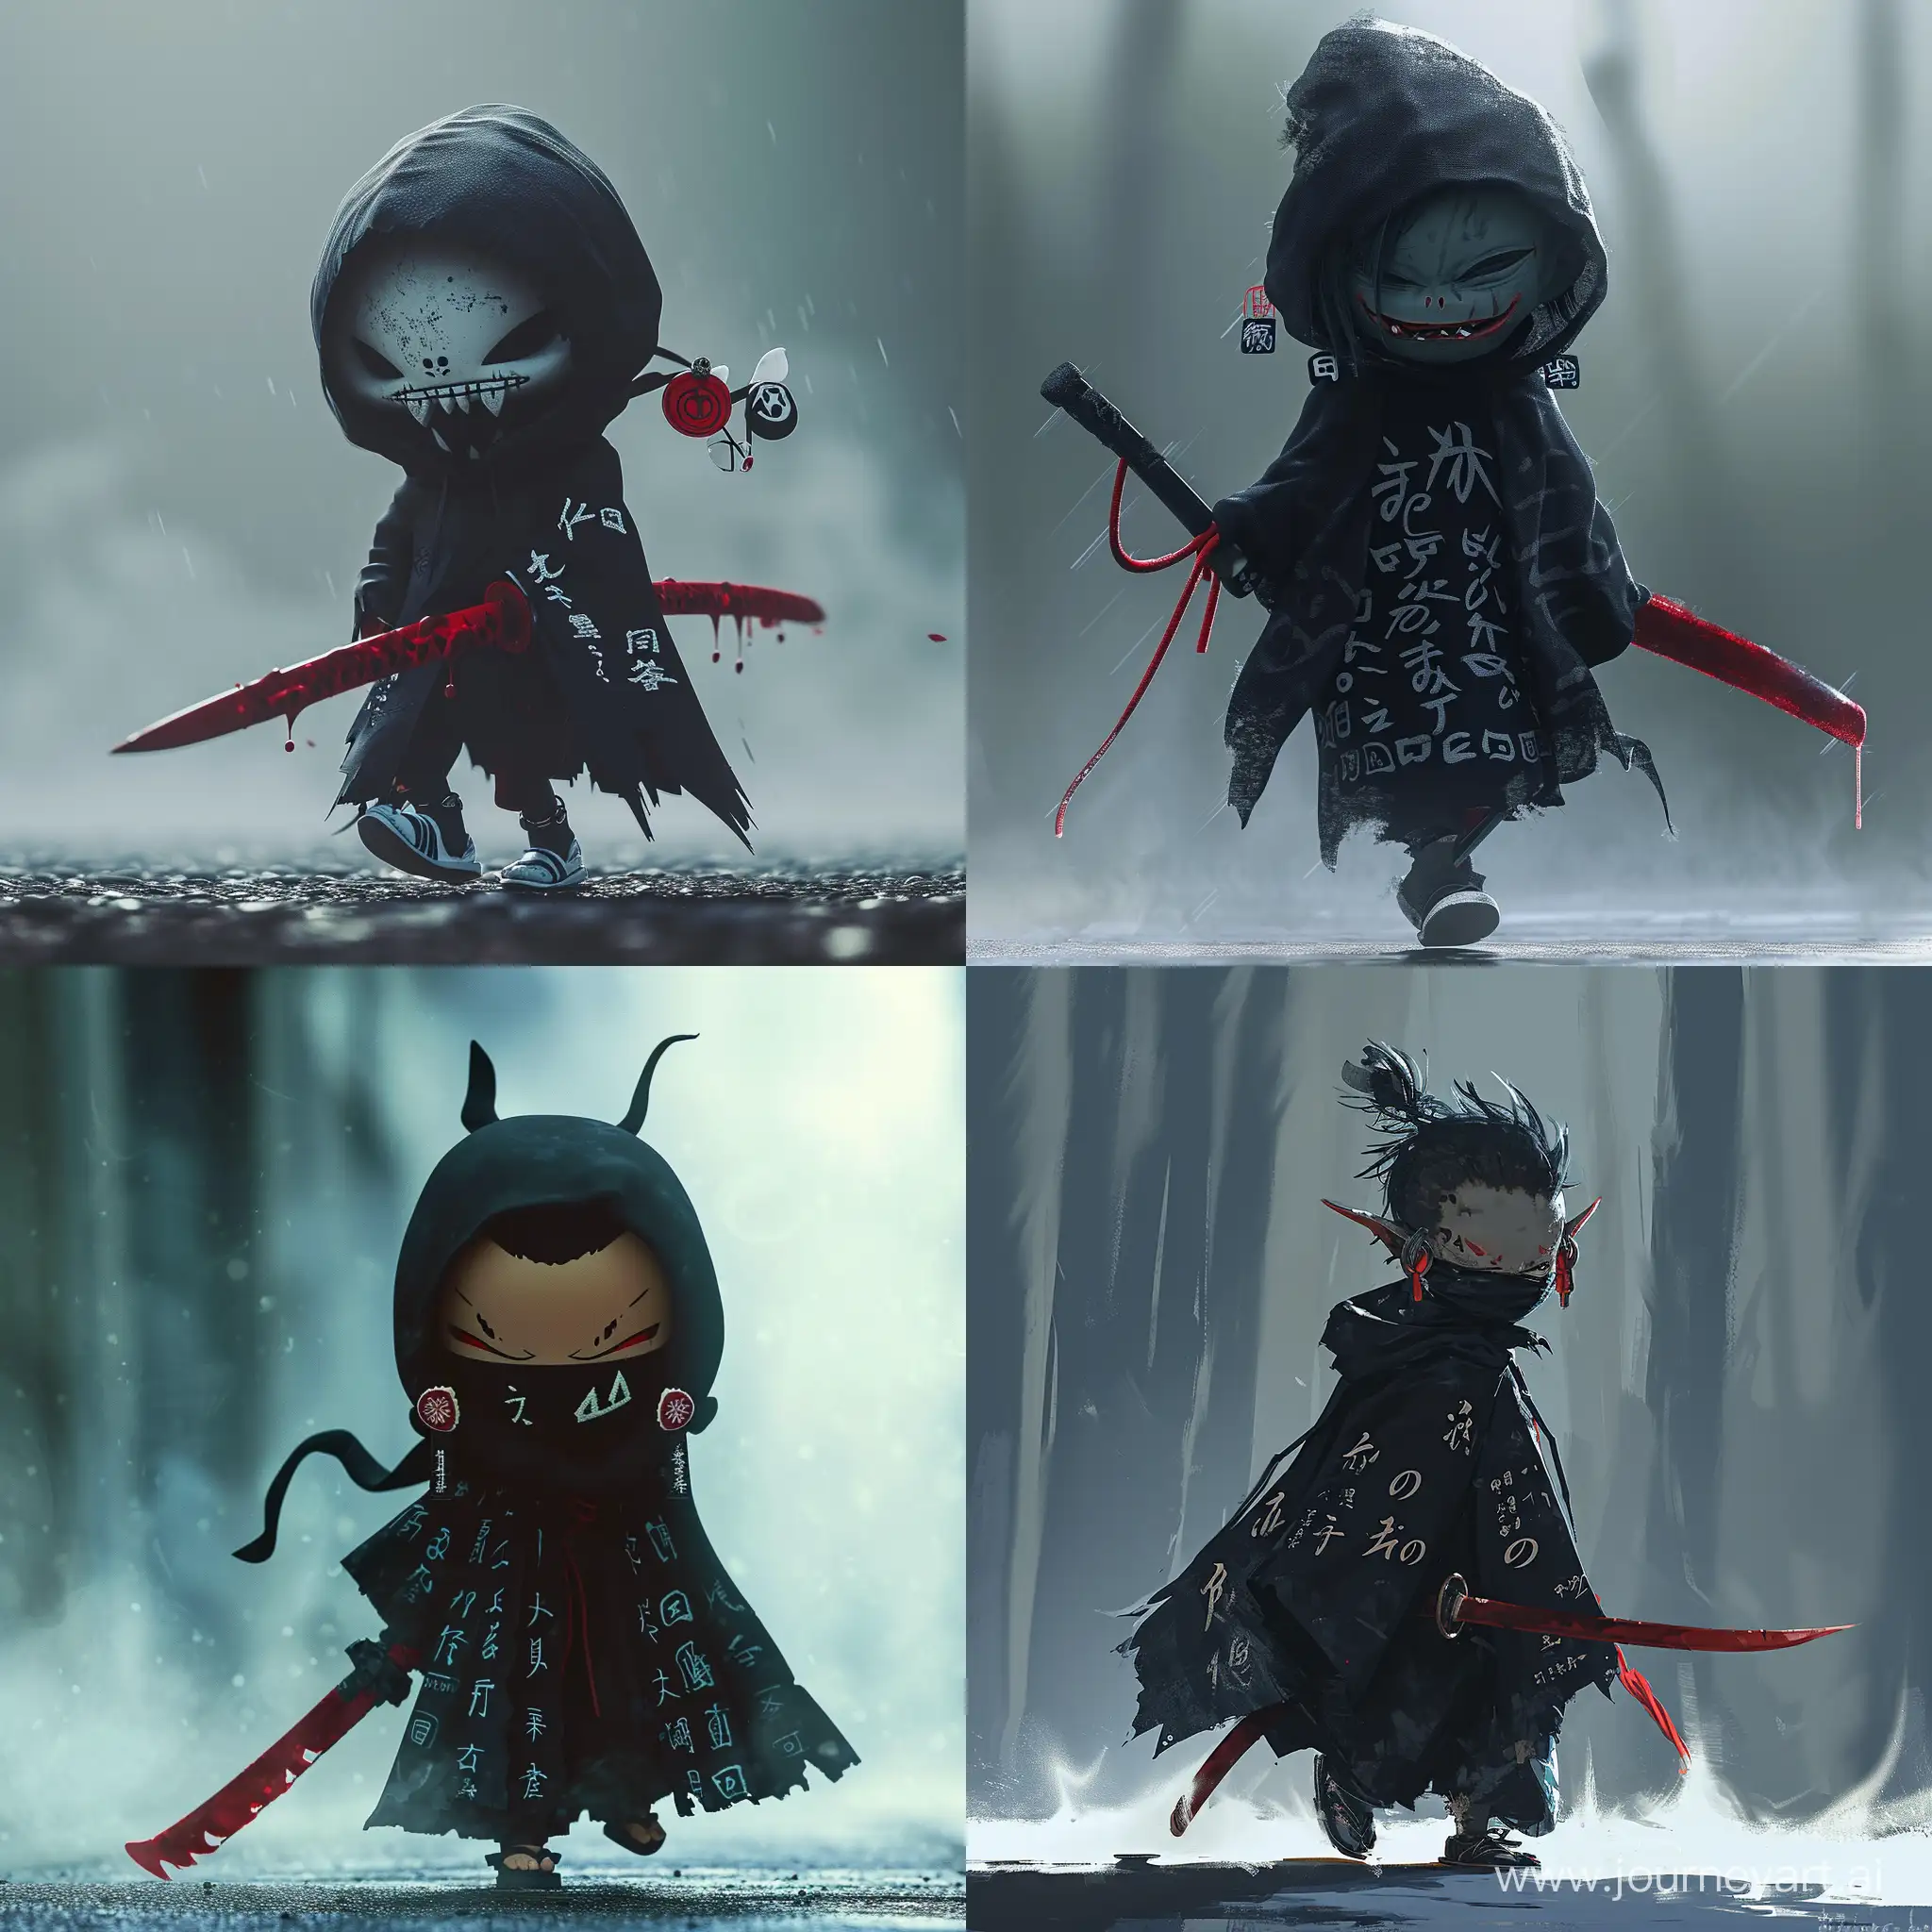 Sinister-Anime-Demon-with-Dark-Red-Sword-in-Mist